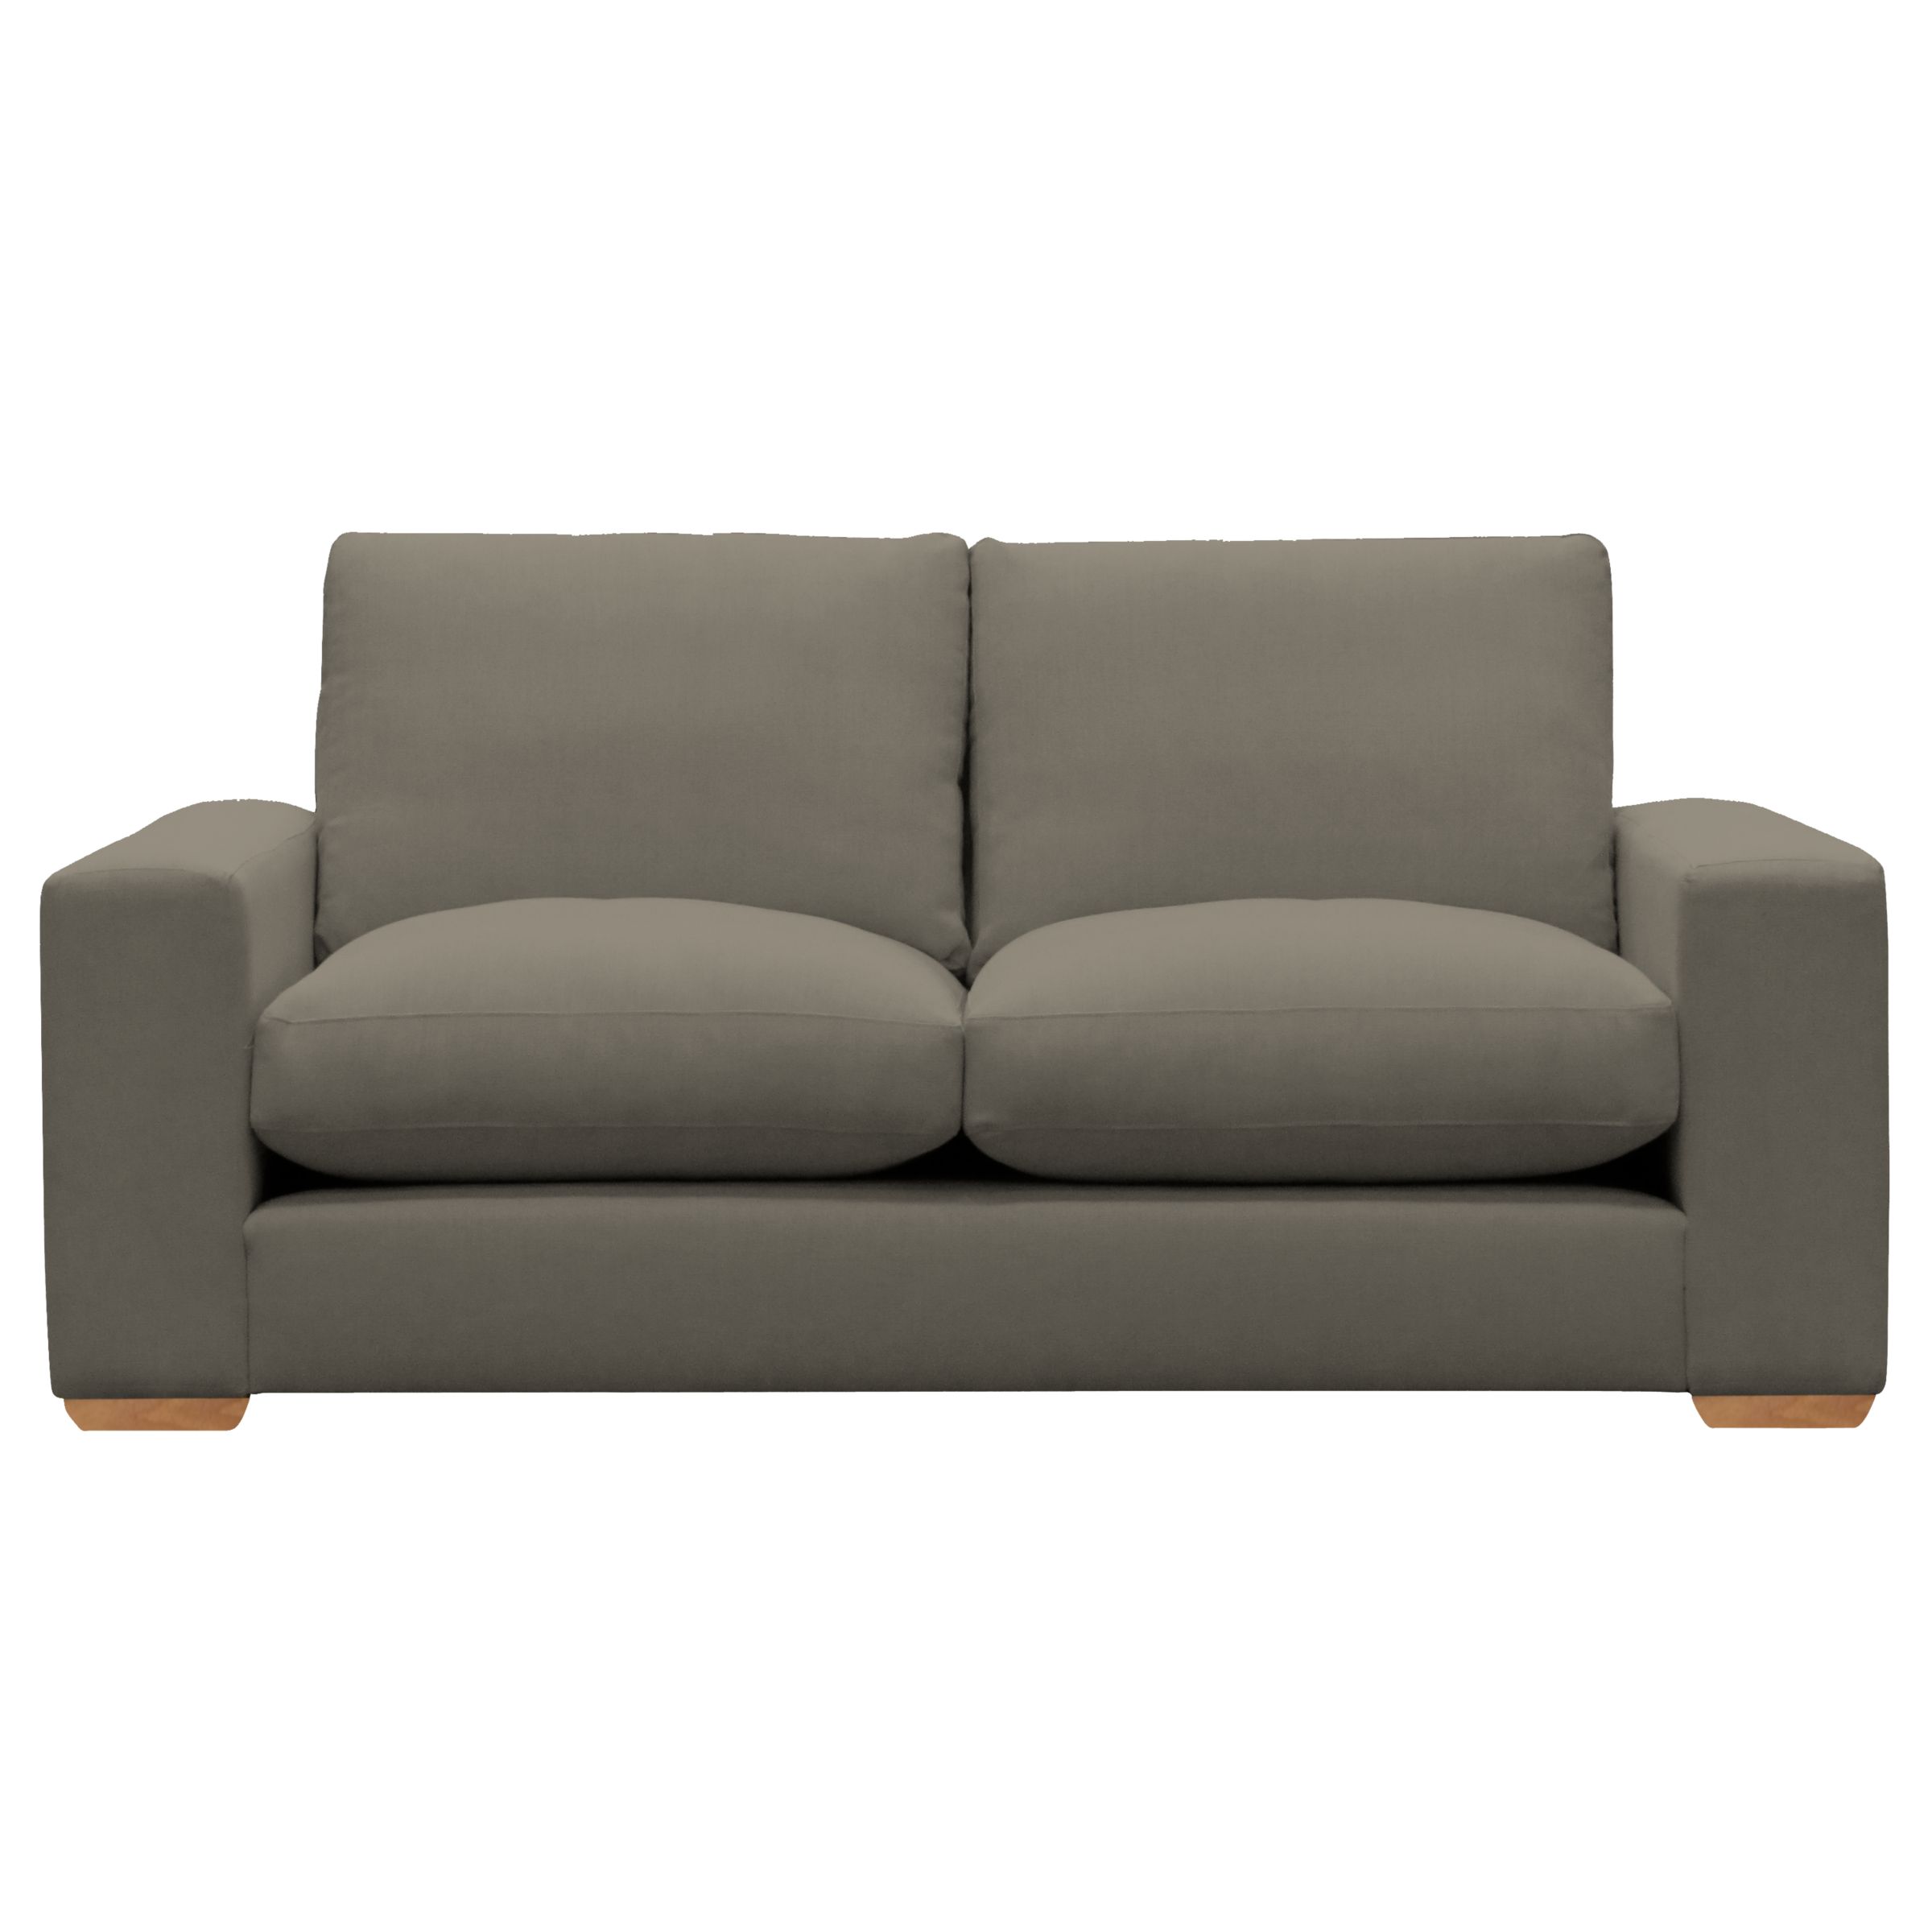 John Lewis Options Wide Arm Medium Sofa, Linley Slate, width 183cm